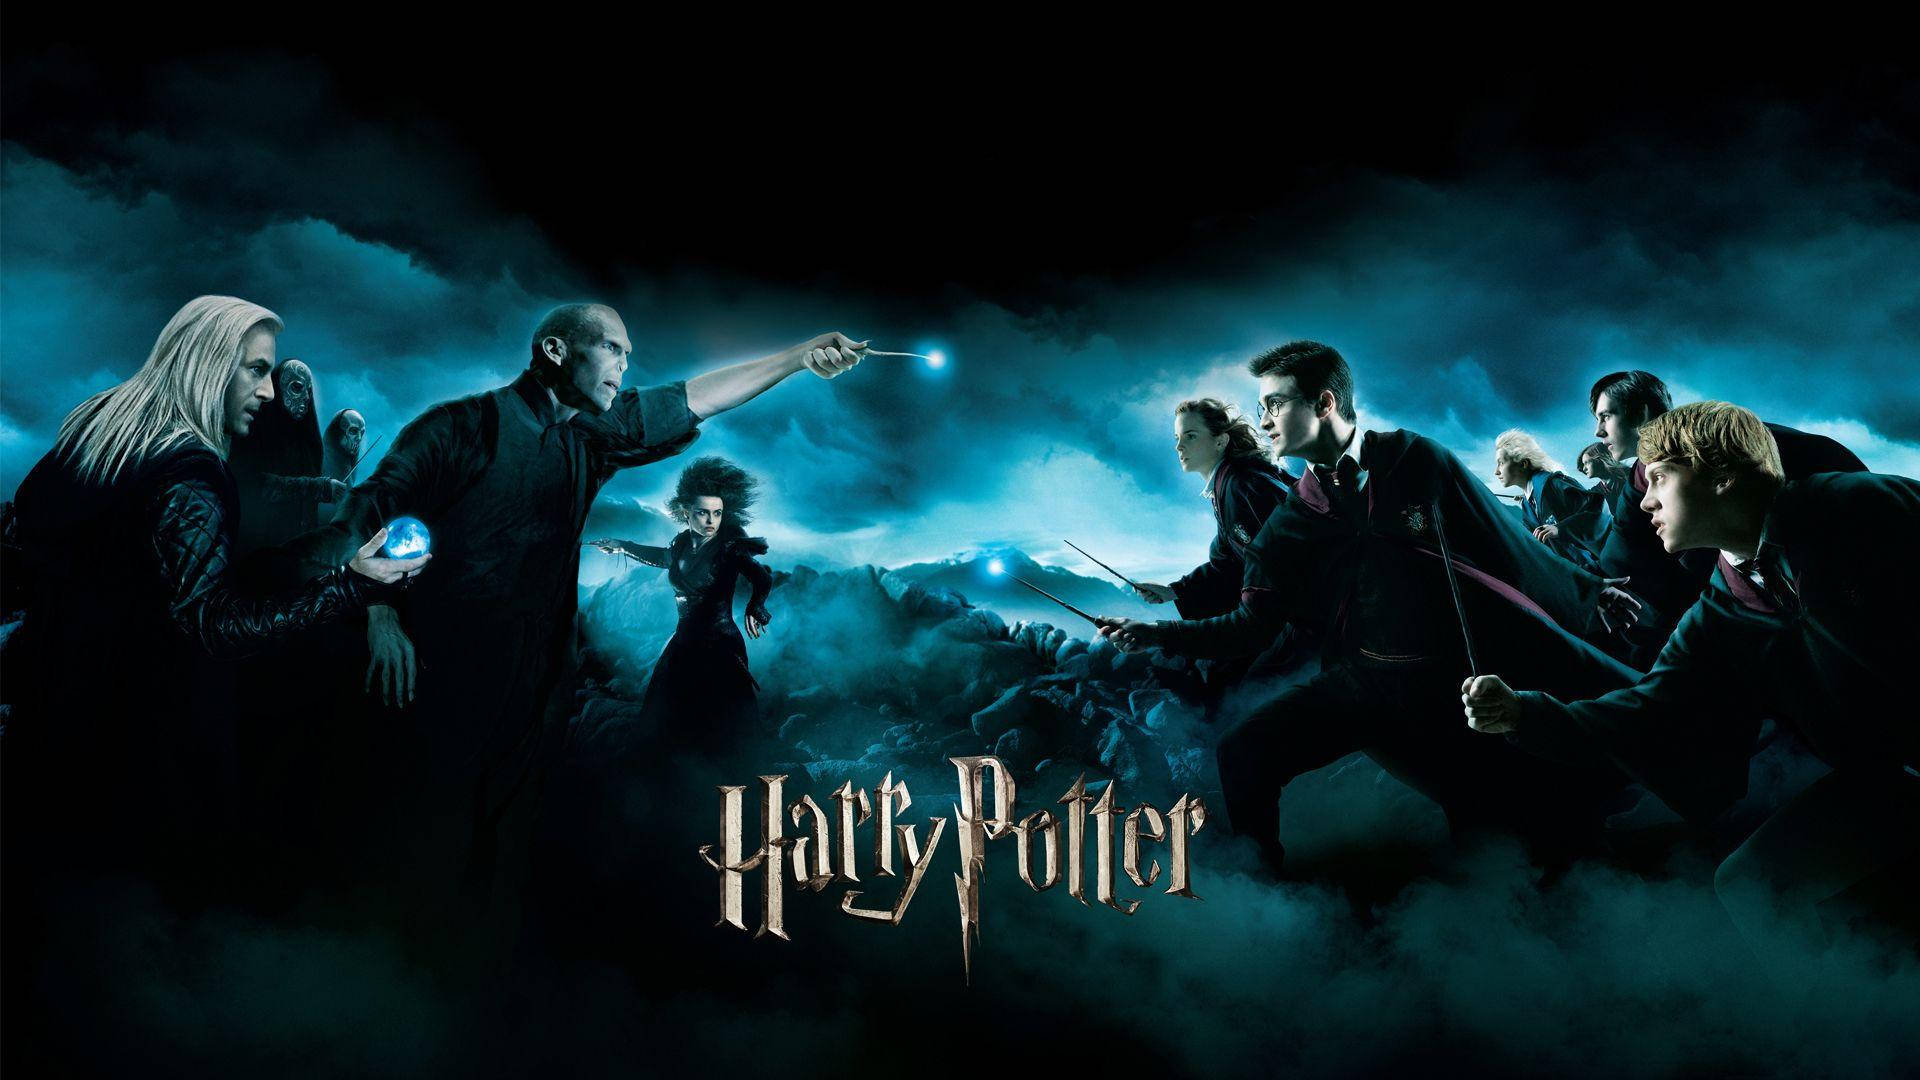 Free Harry Potter Desktop Wallpaper Downloads, [100+] Harry Potter Desktop  Wallpapers for FREE 